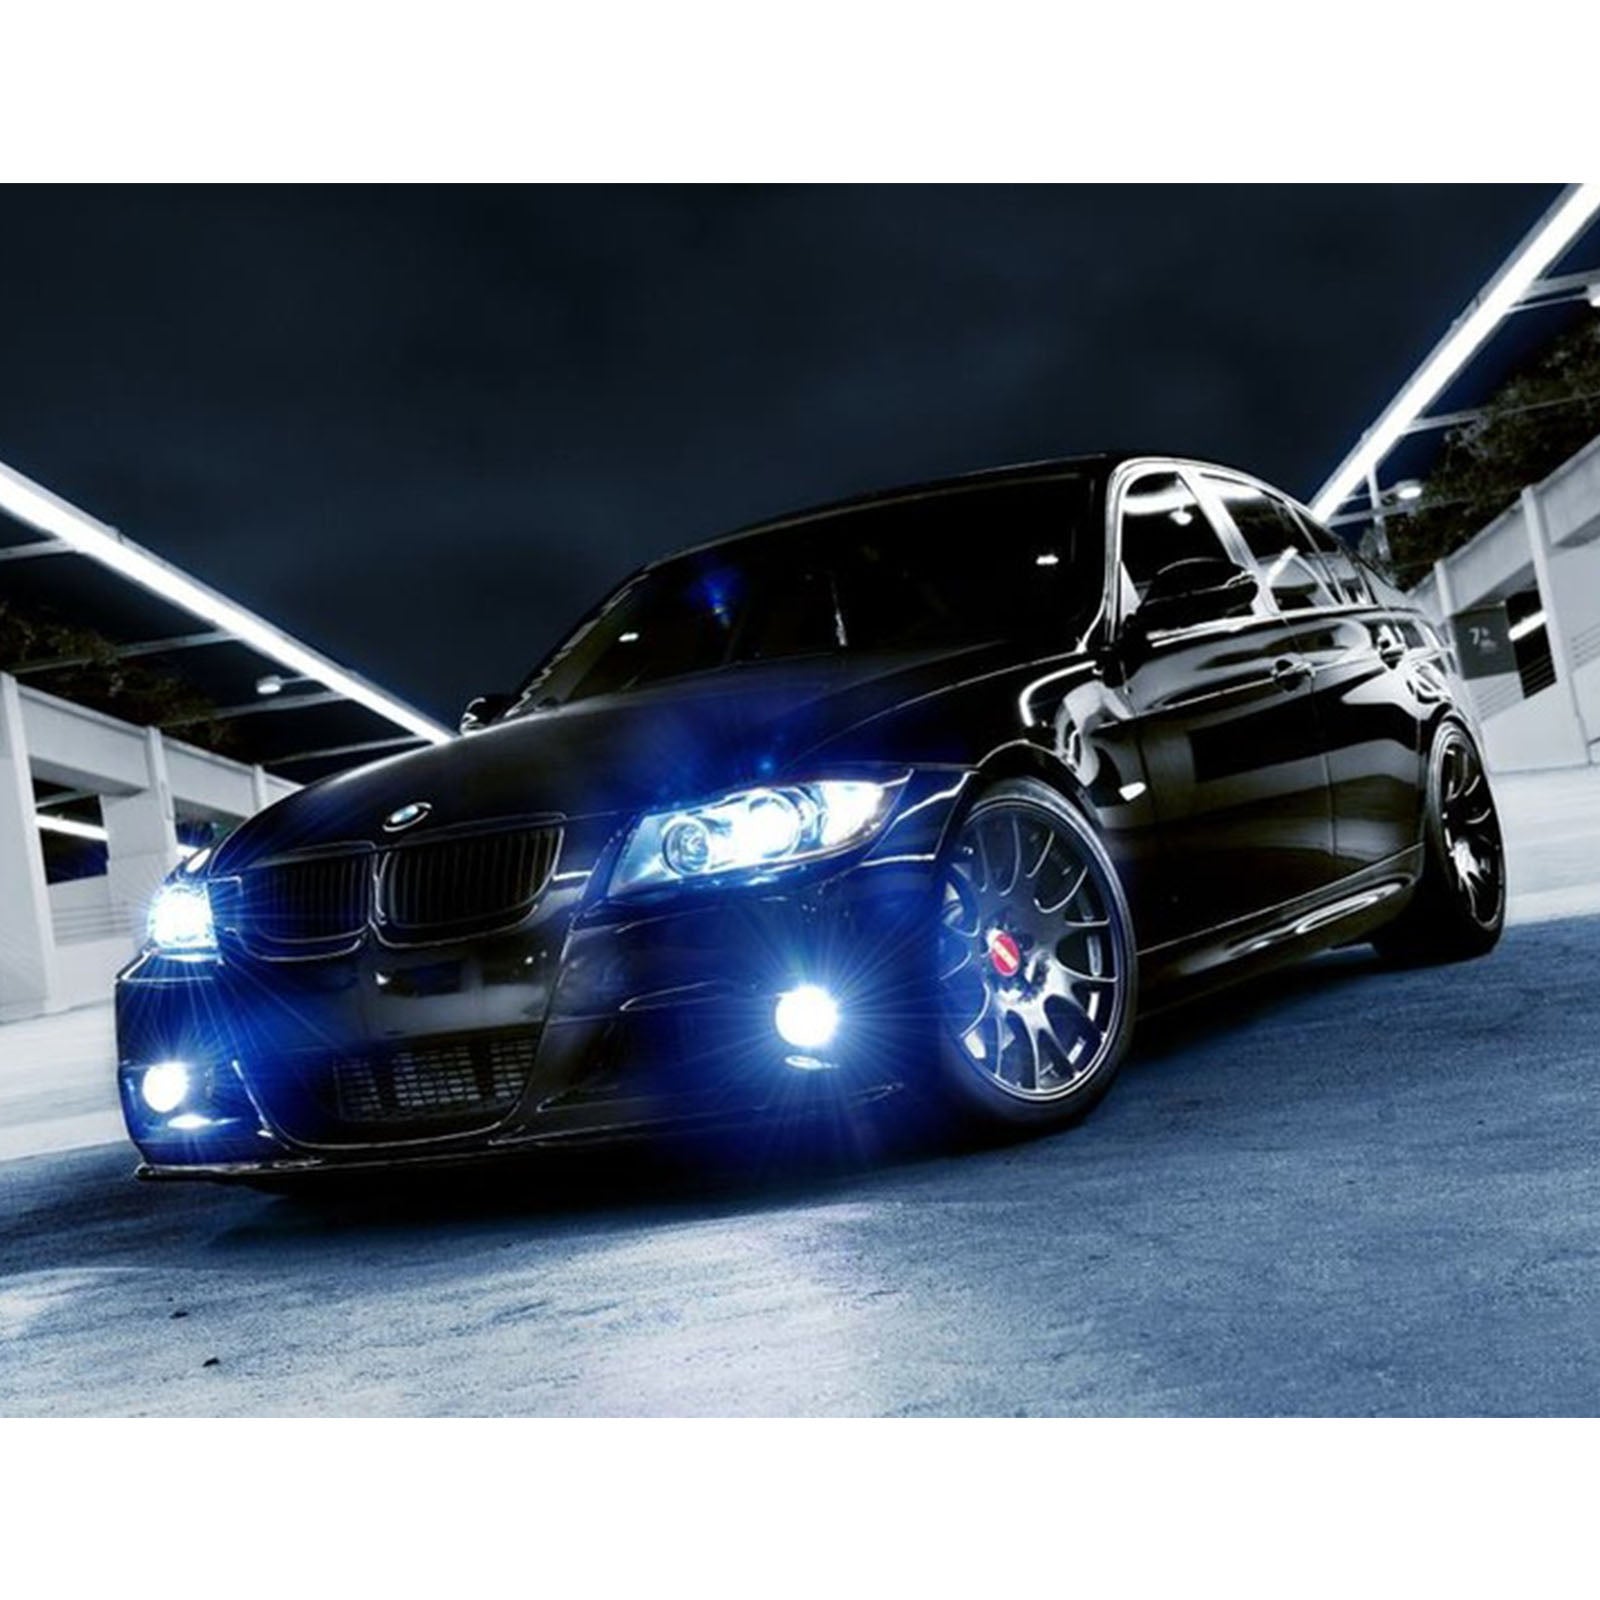 H7 Xenon White LED High Beam Headlight Bulb 6000K For BMW E90 F30